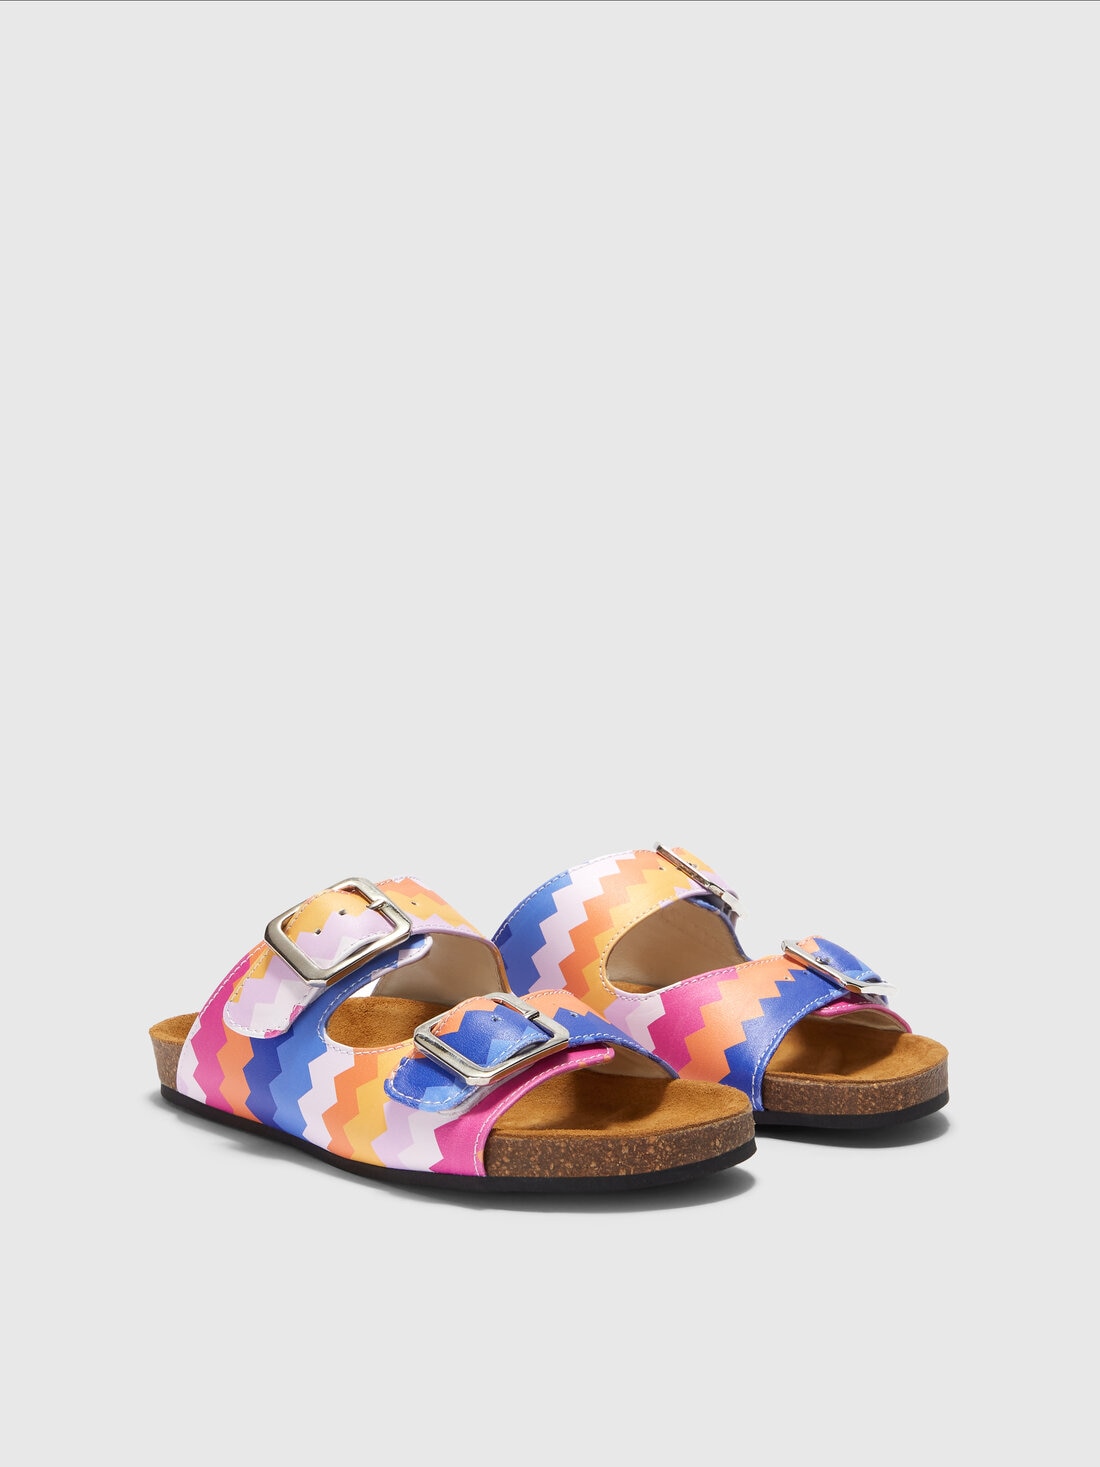 Sandalias con doble tira y motivo de espigas, Multicolor  - KS24SY01BV00FWSM923 - 1